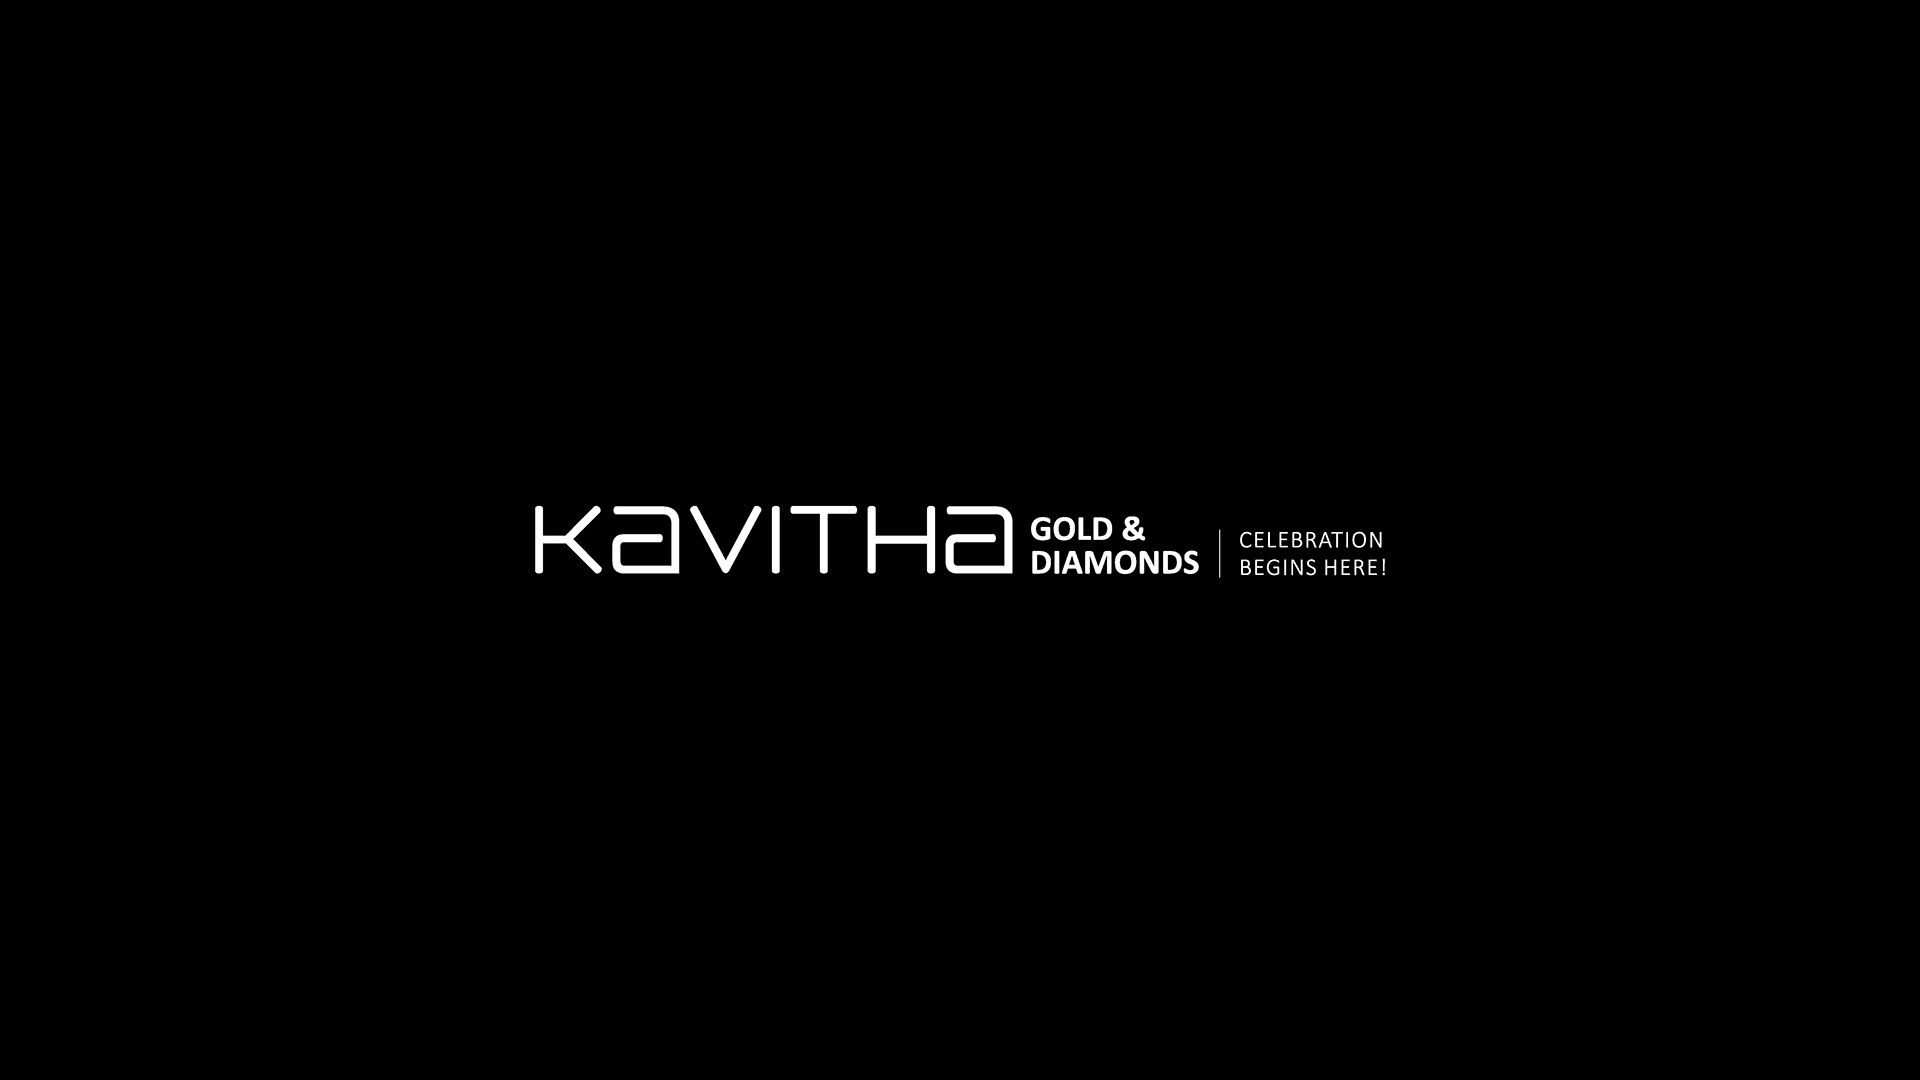 Kavtiha Gold & Diamonds Logo on black background